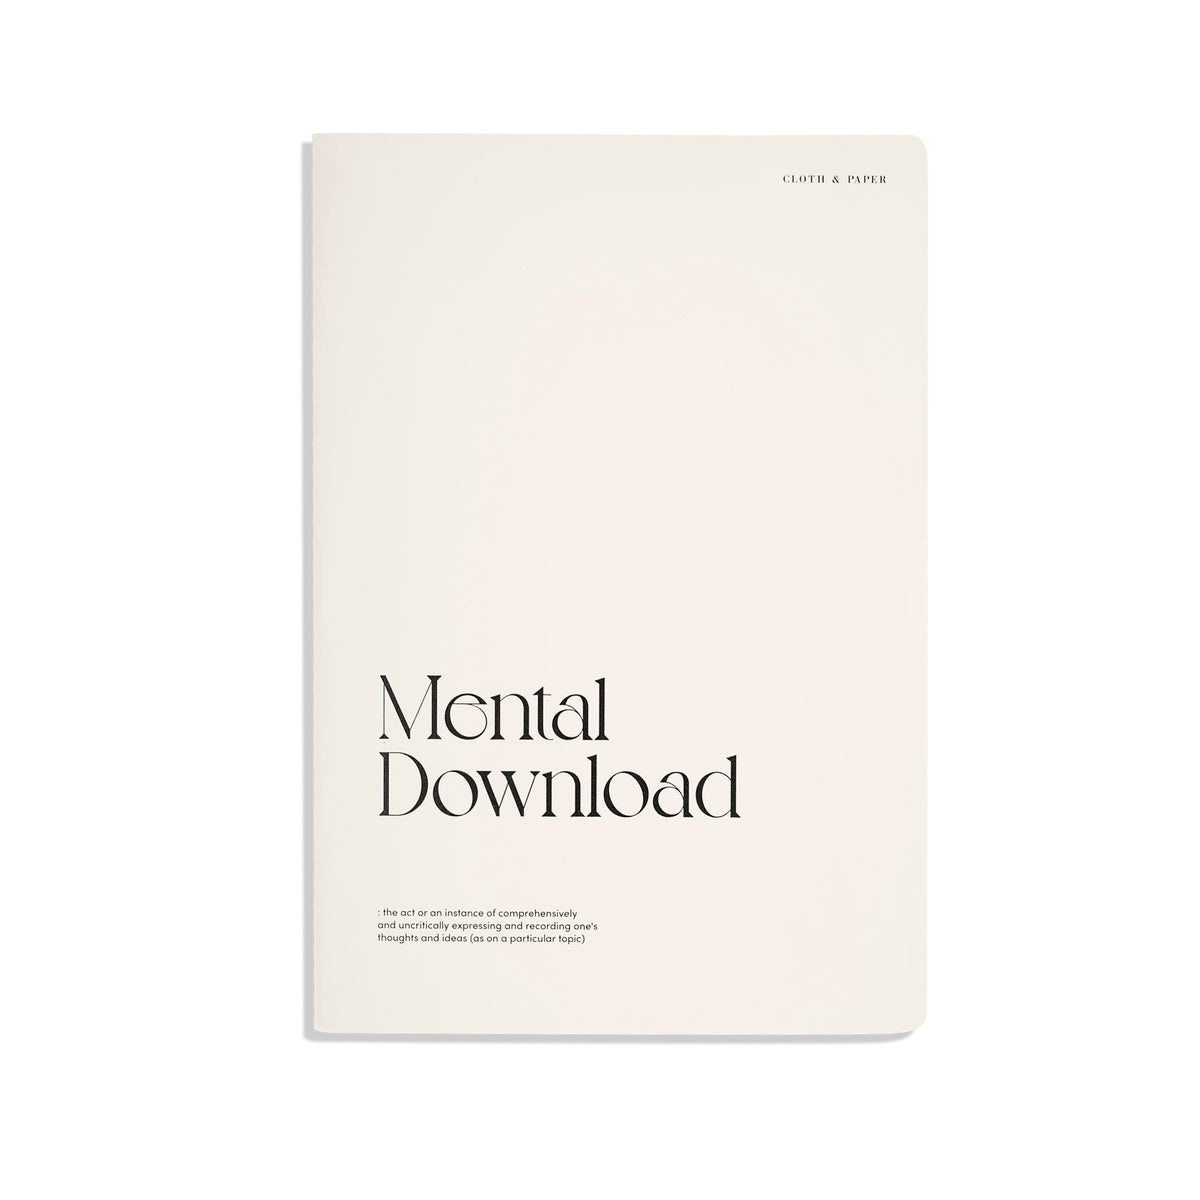 Mental Download Inserts  Cloth & Paper – CLOTH & PAPER